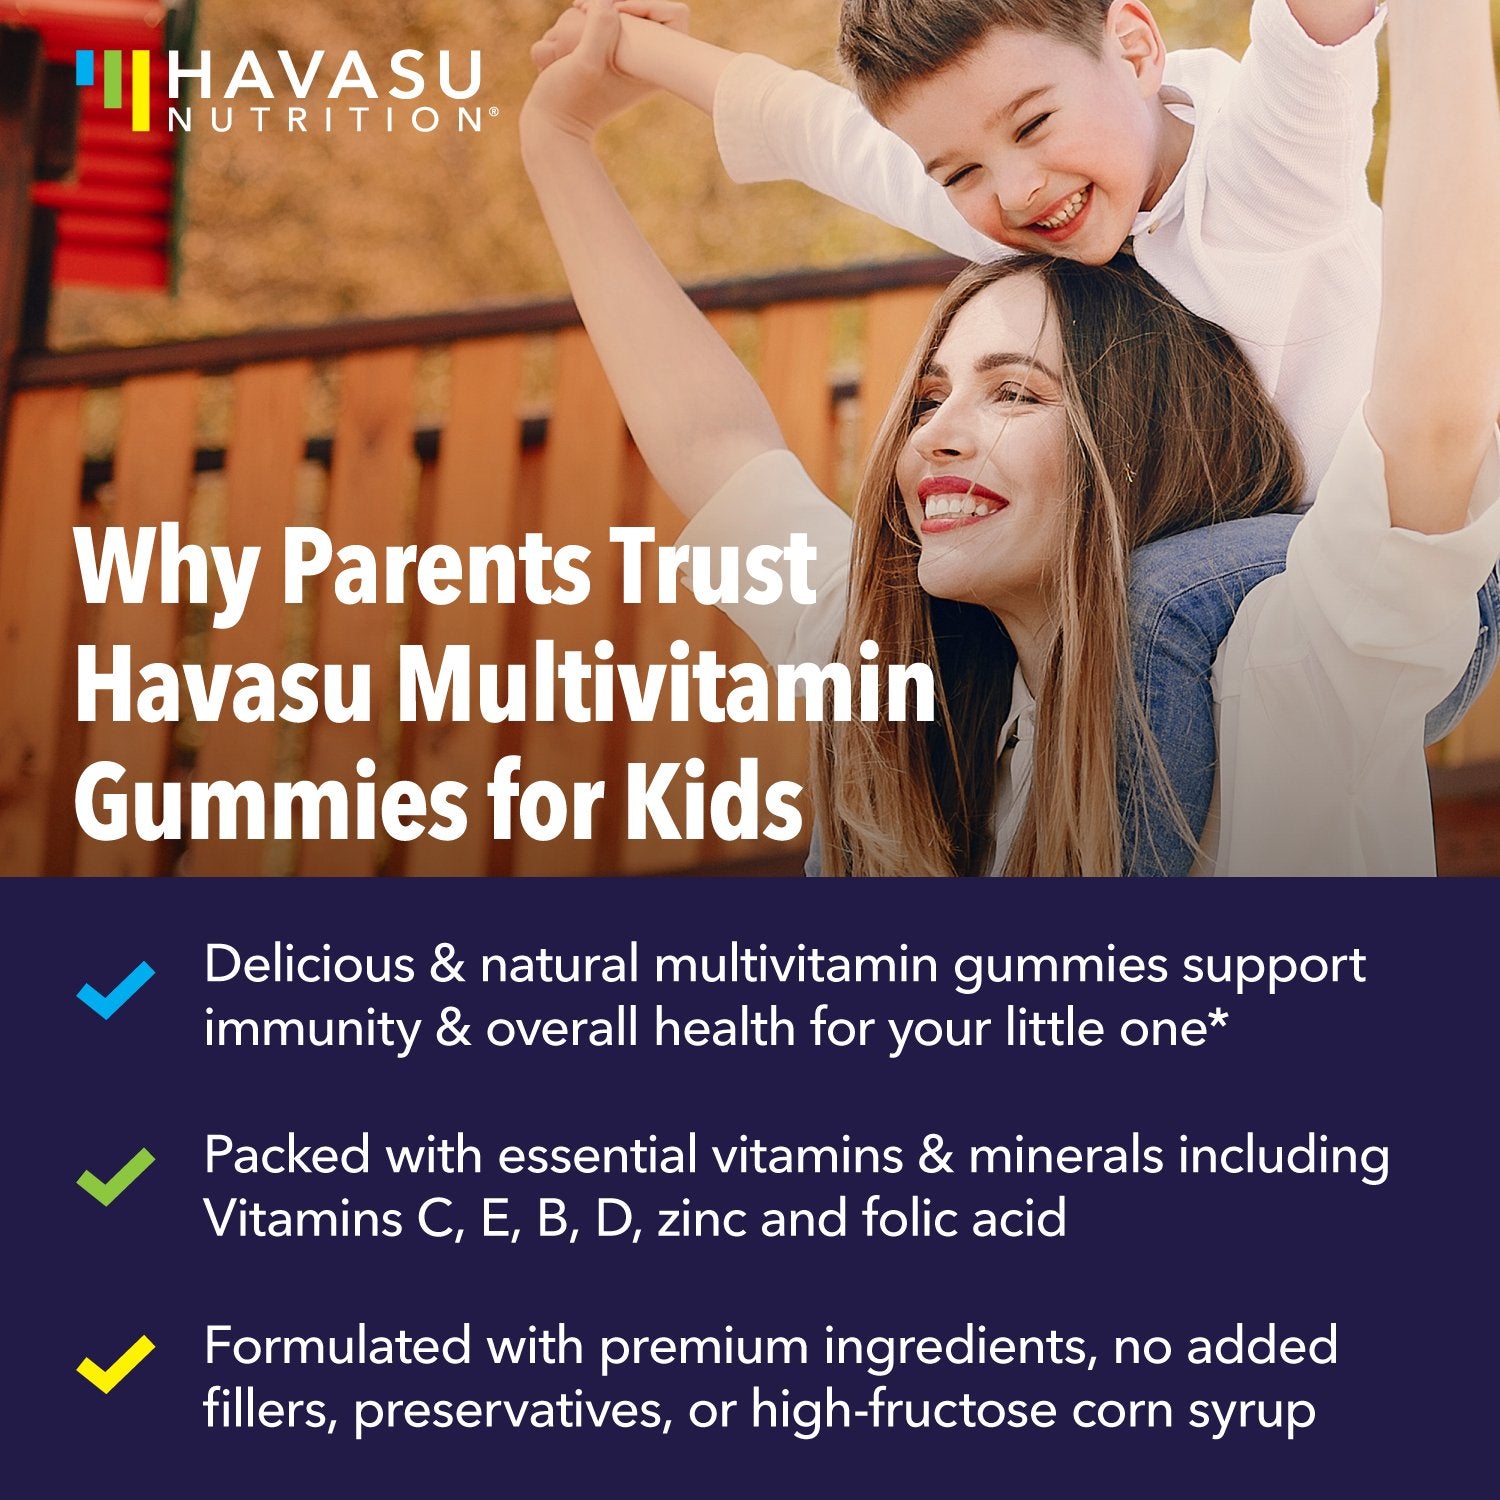 Multivitamin Gummies for Kids, Fruit Flavor, 60ct - Havasu Nutrition